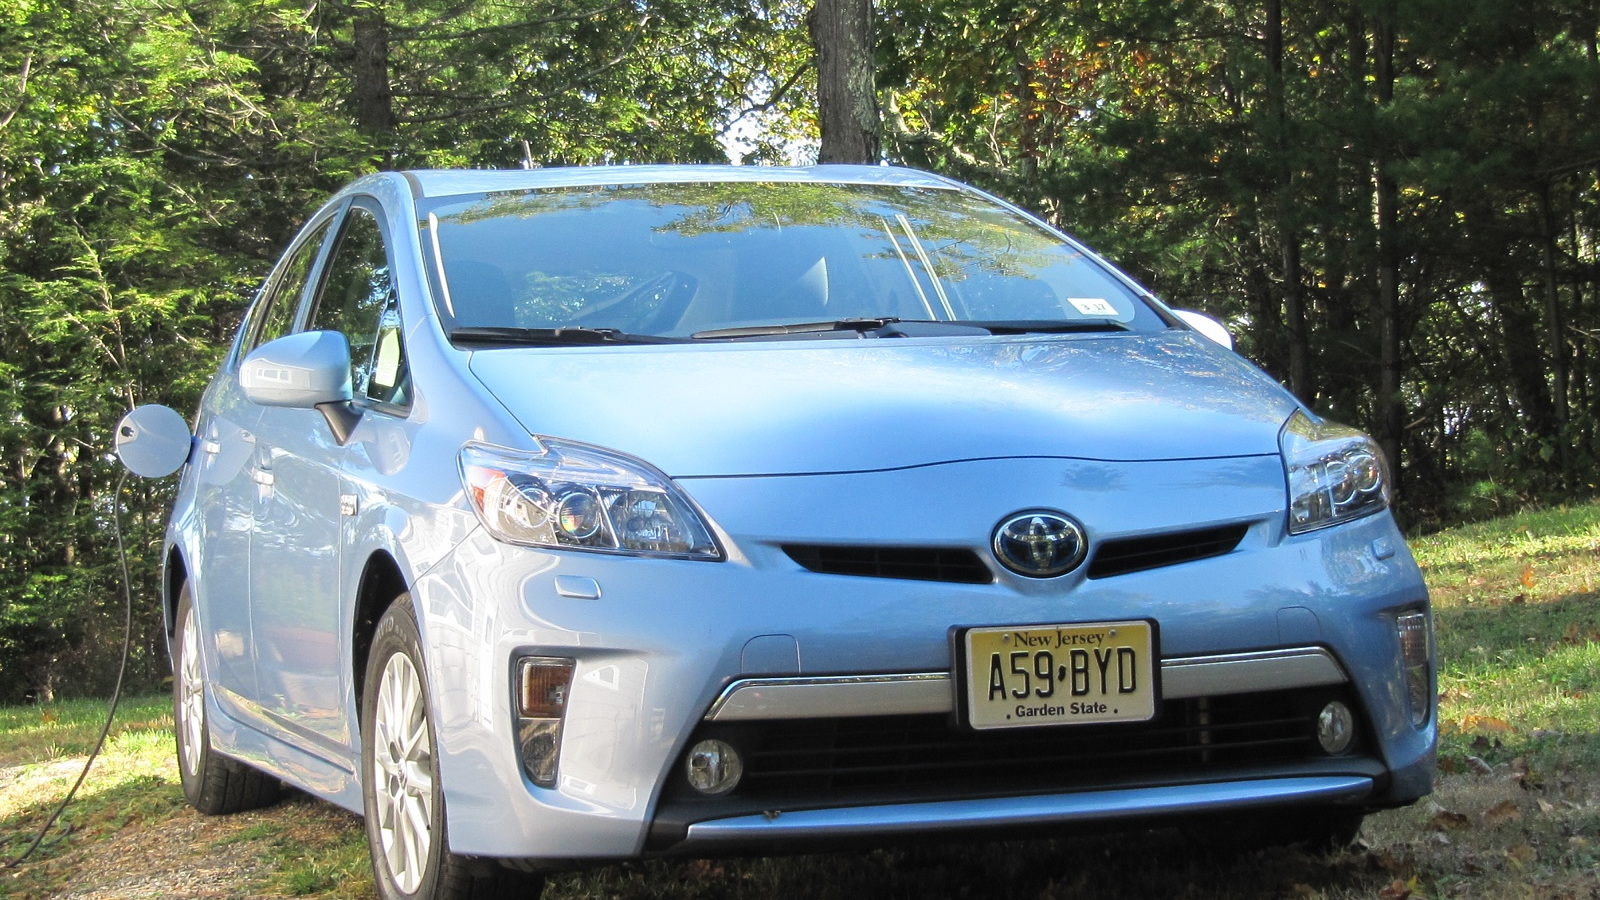 2012 Toyota Prius Plug-In Hybrid, Catskill Mountains, NY, Oct 2012